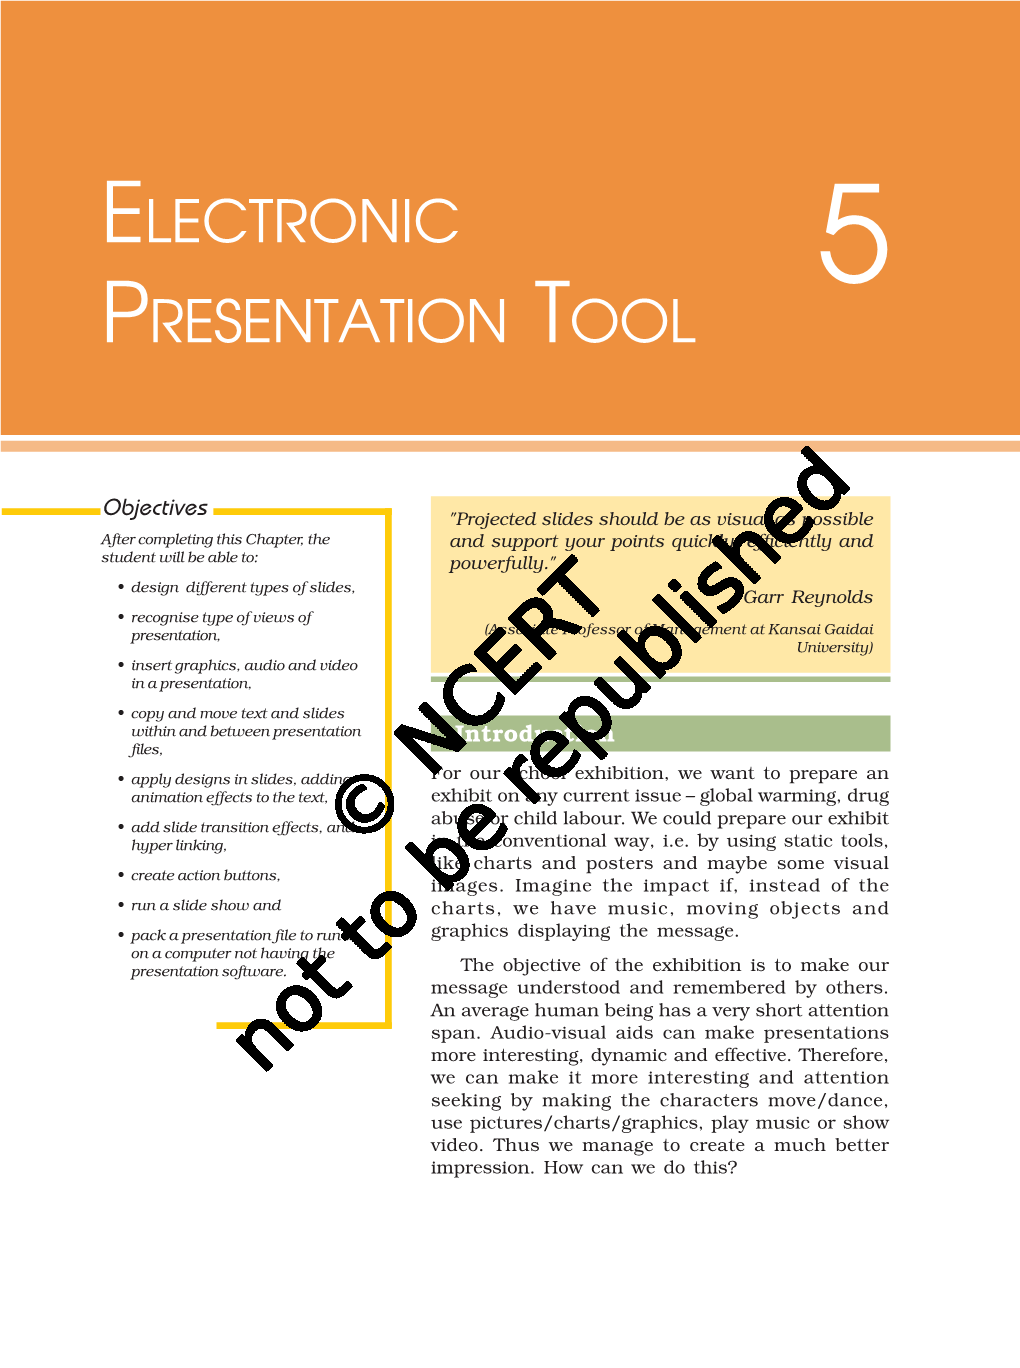 Electronic Presentation Tool